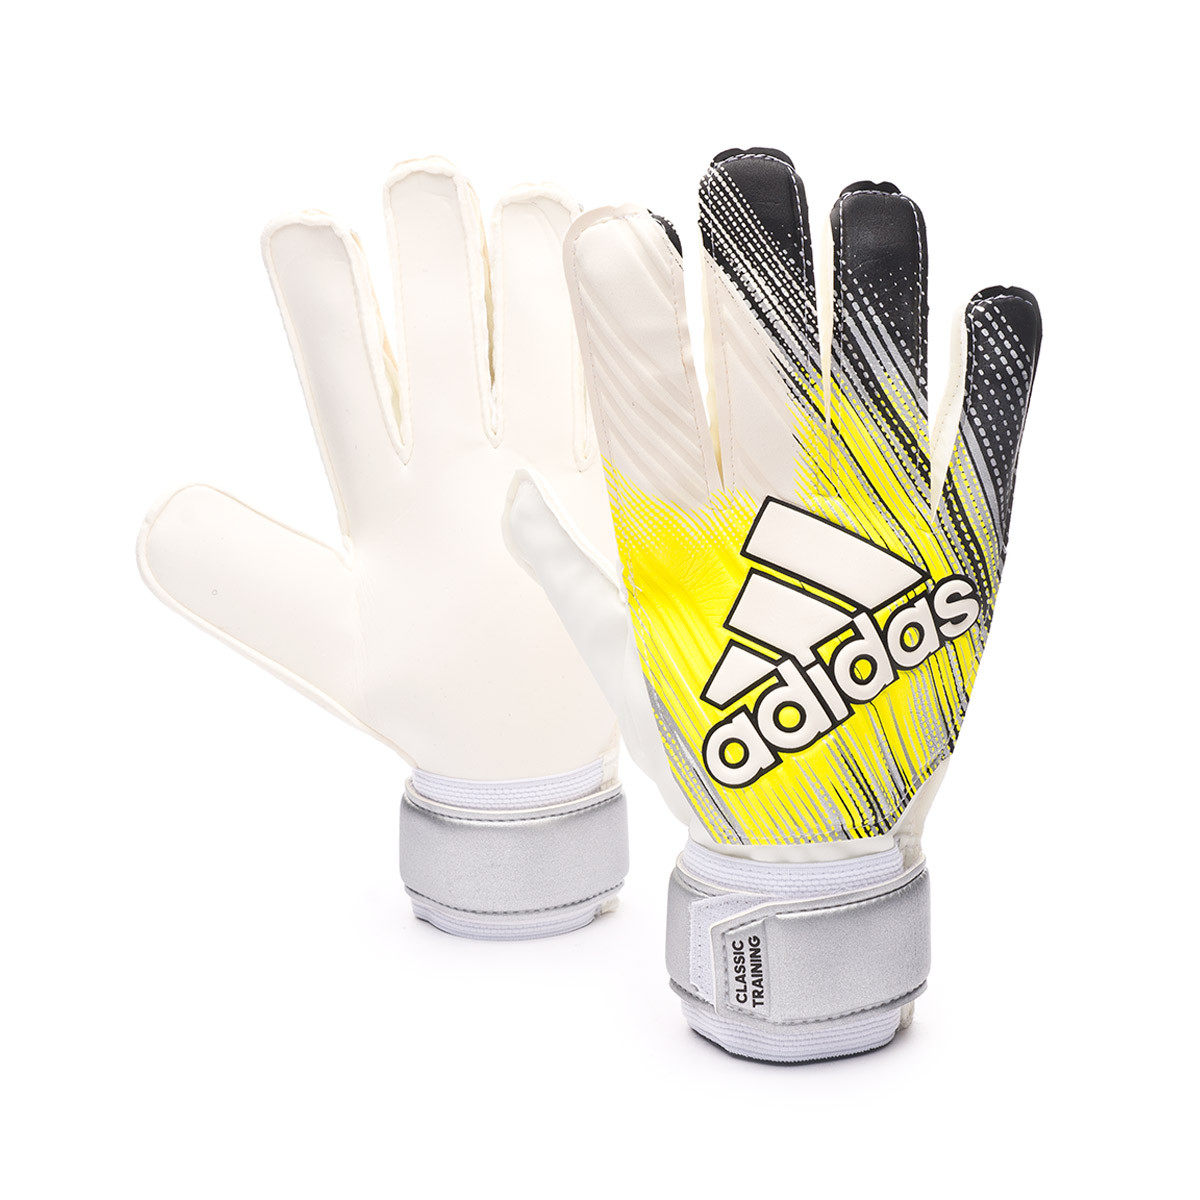 all yellow adidas football gloves